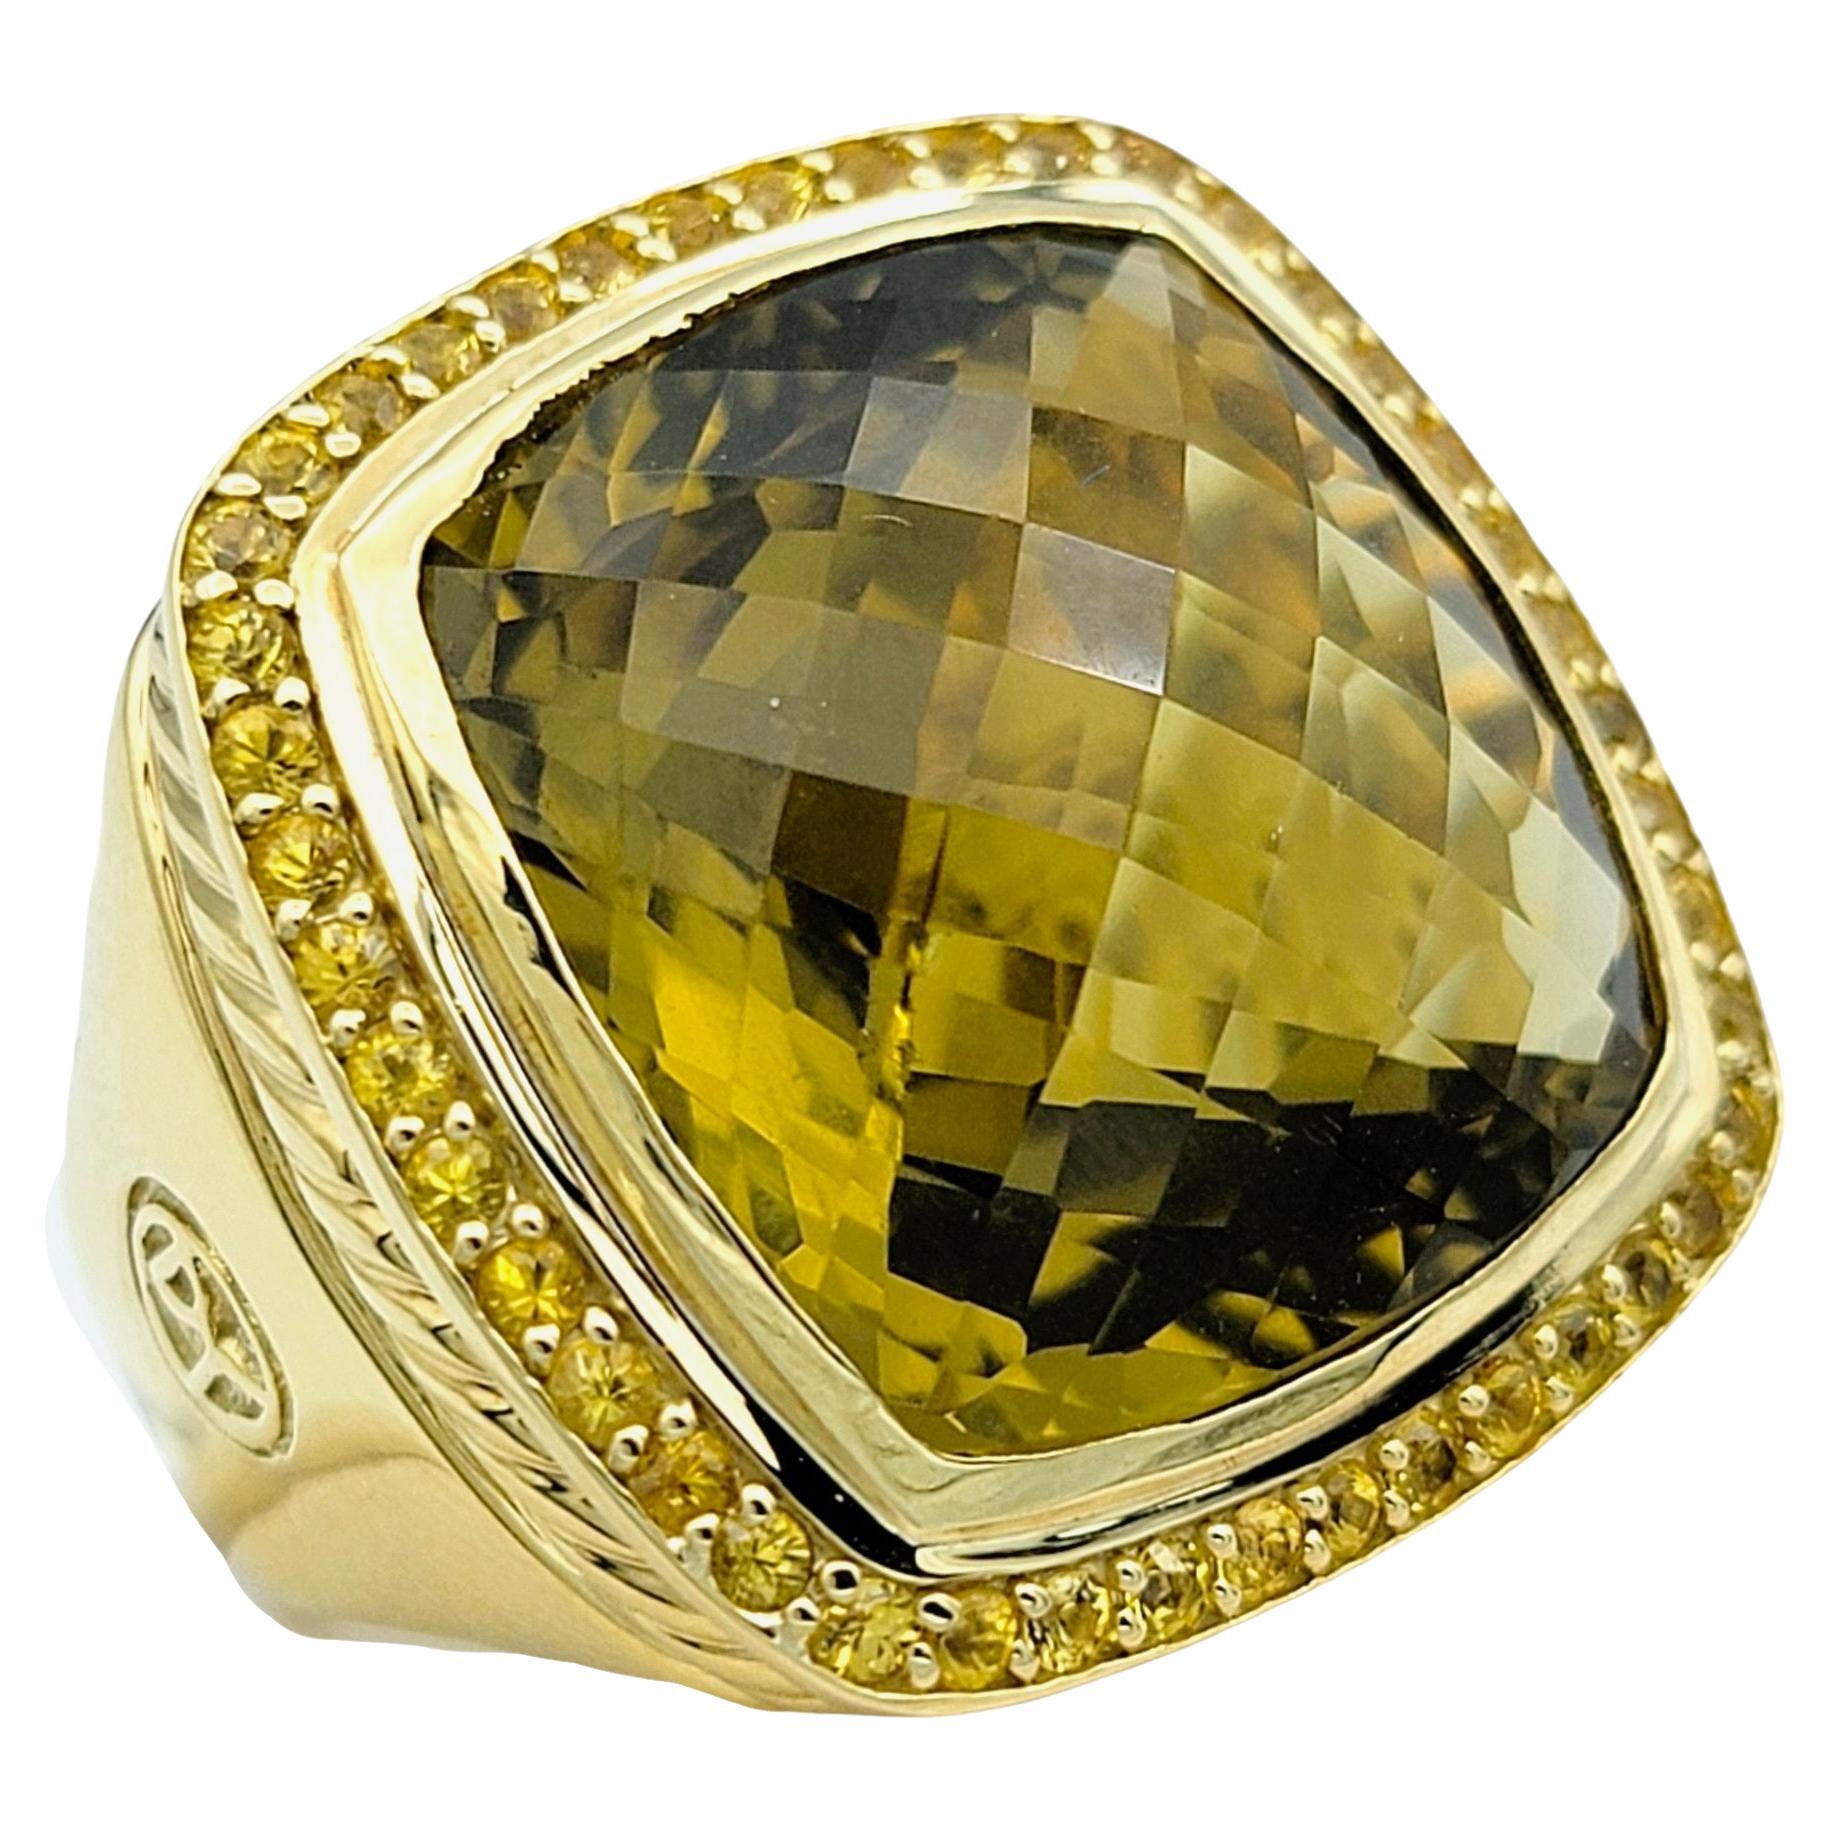 Contemporary David Yurman Citrine and Yellow Sapphire Albion Ring Set in 18 Karat Yellow Gold